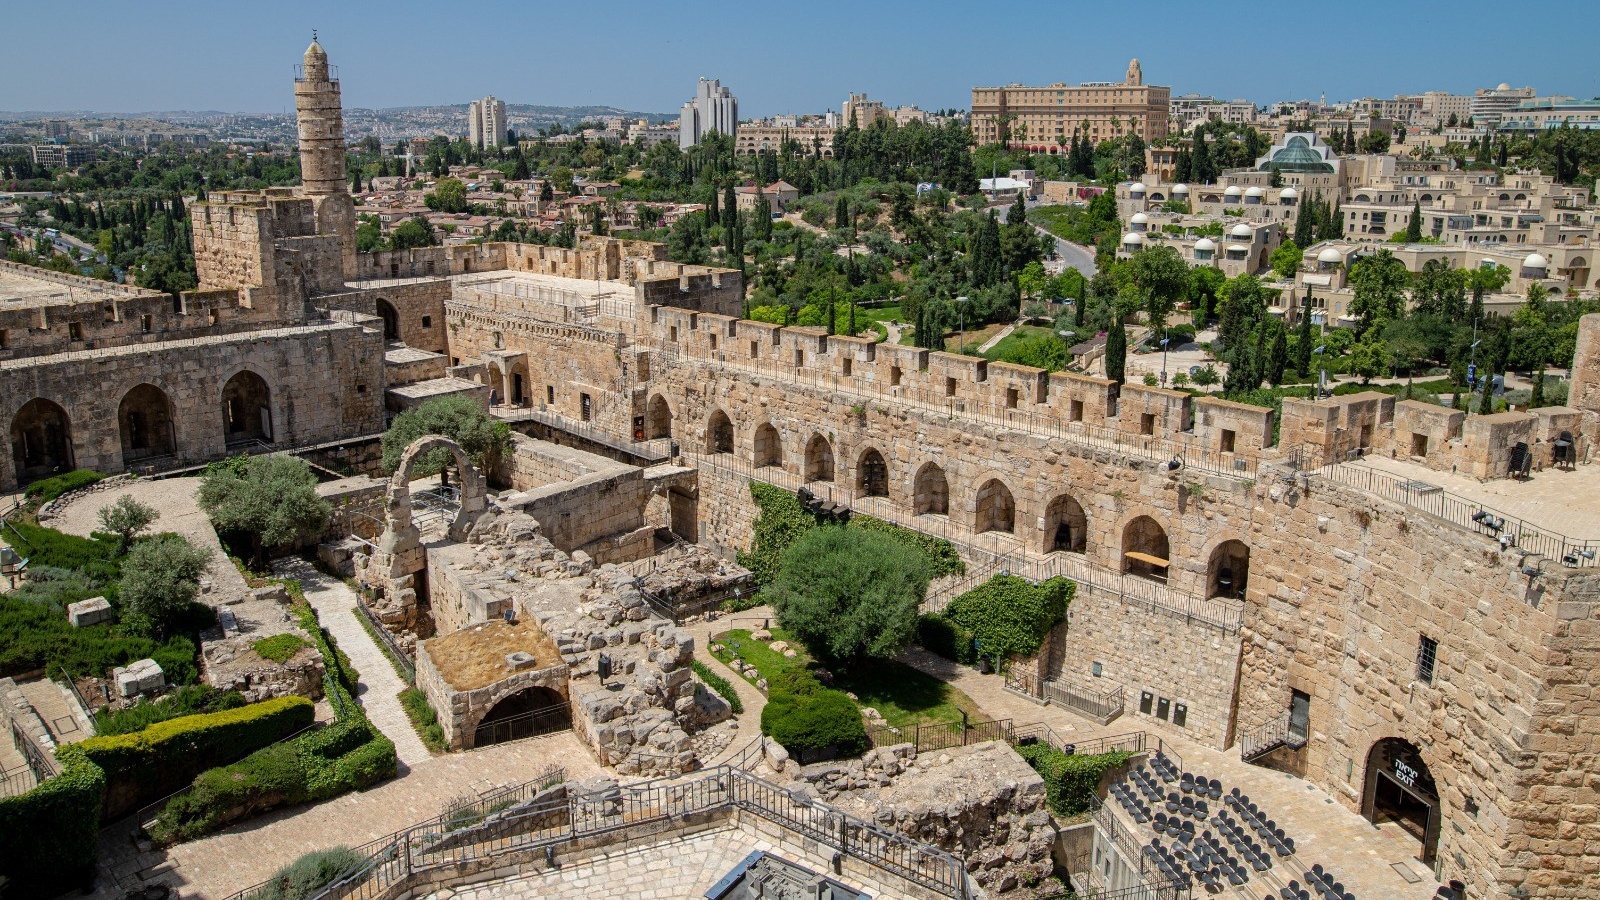 keranyo in jerusalem tour and travel